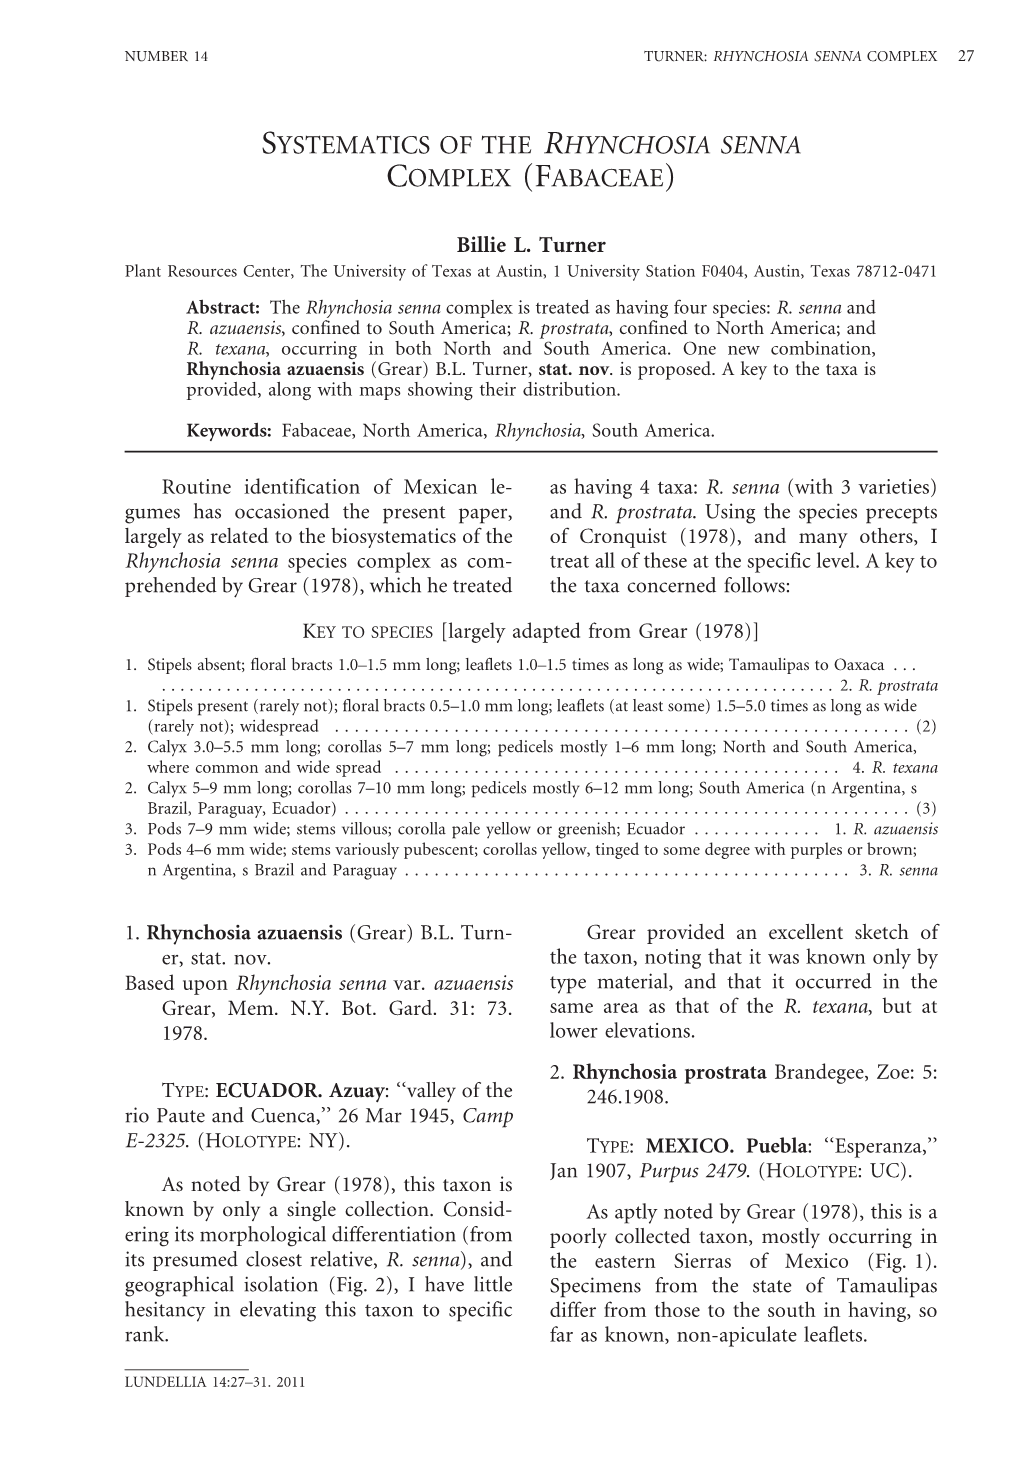 Systematics of the Rhynchosia Senna Complex (Fabaceae)